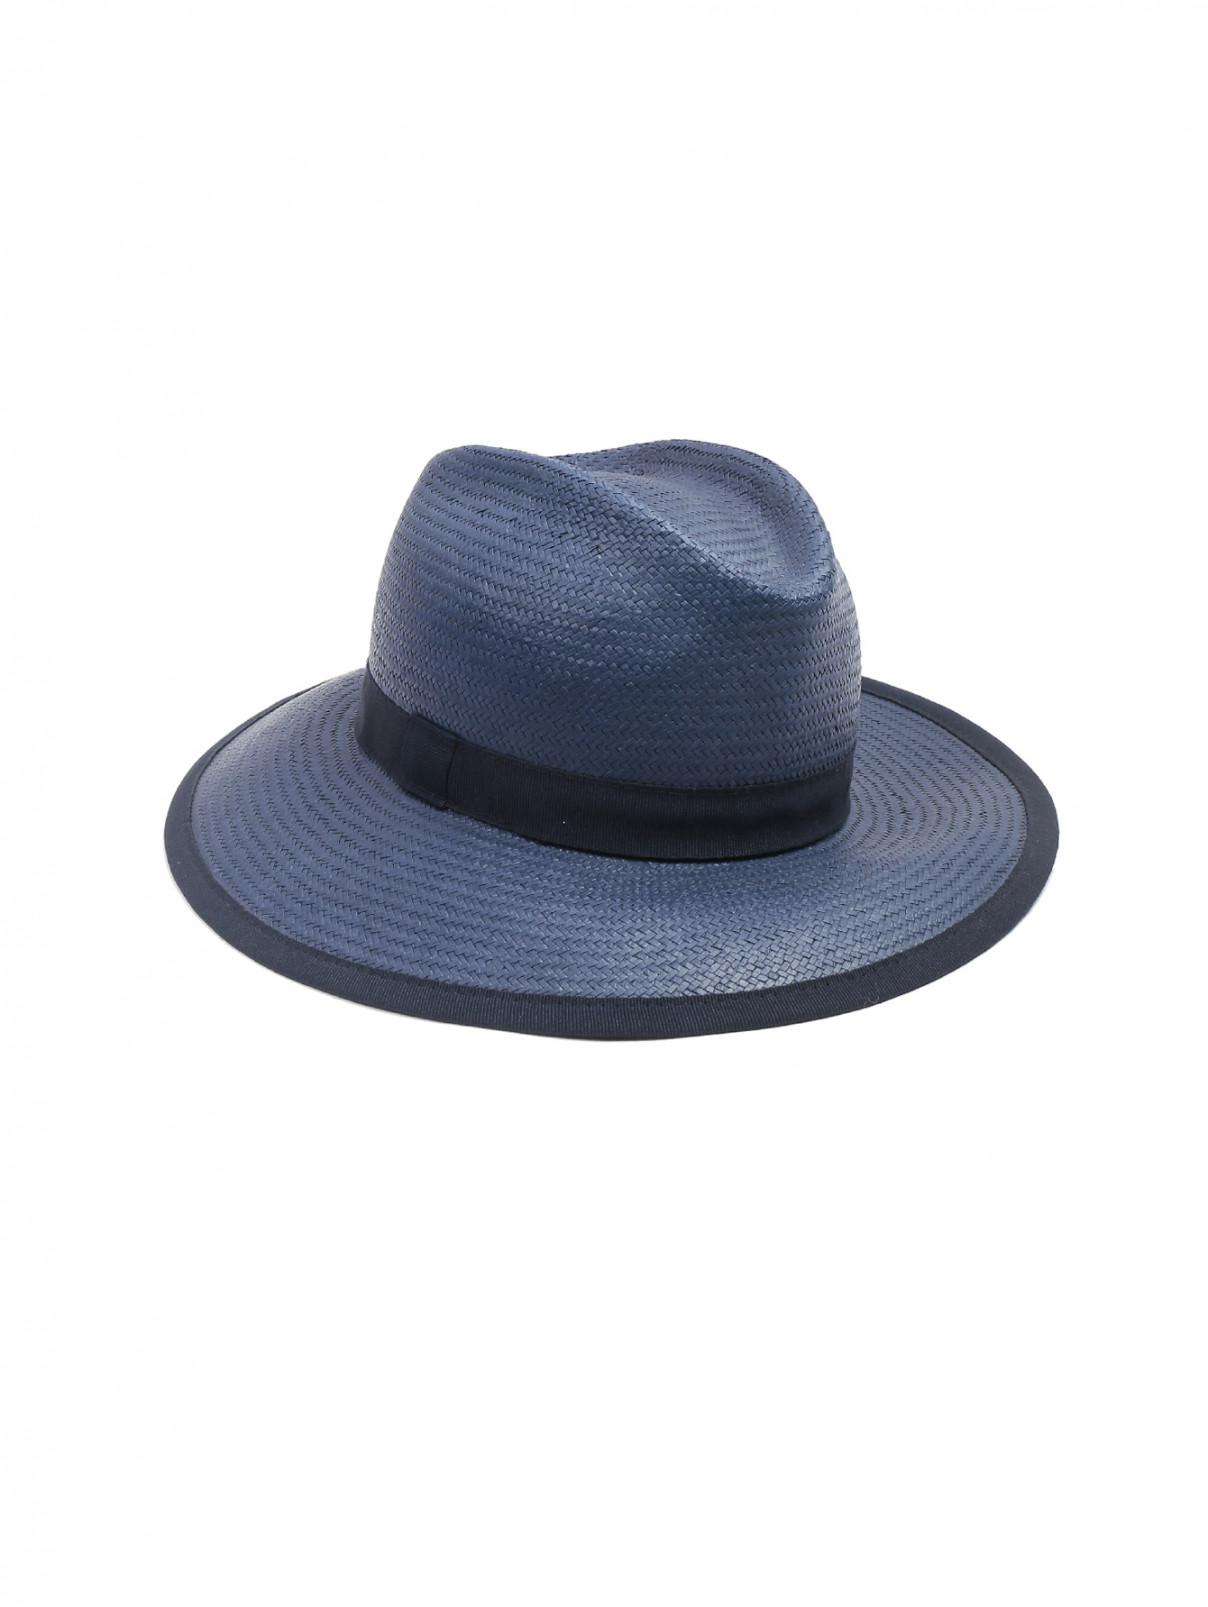 Шляпа плетеная Weekend Max Mara  –  Общий вид  – Цвет:  Синий